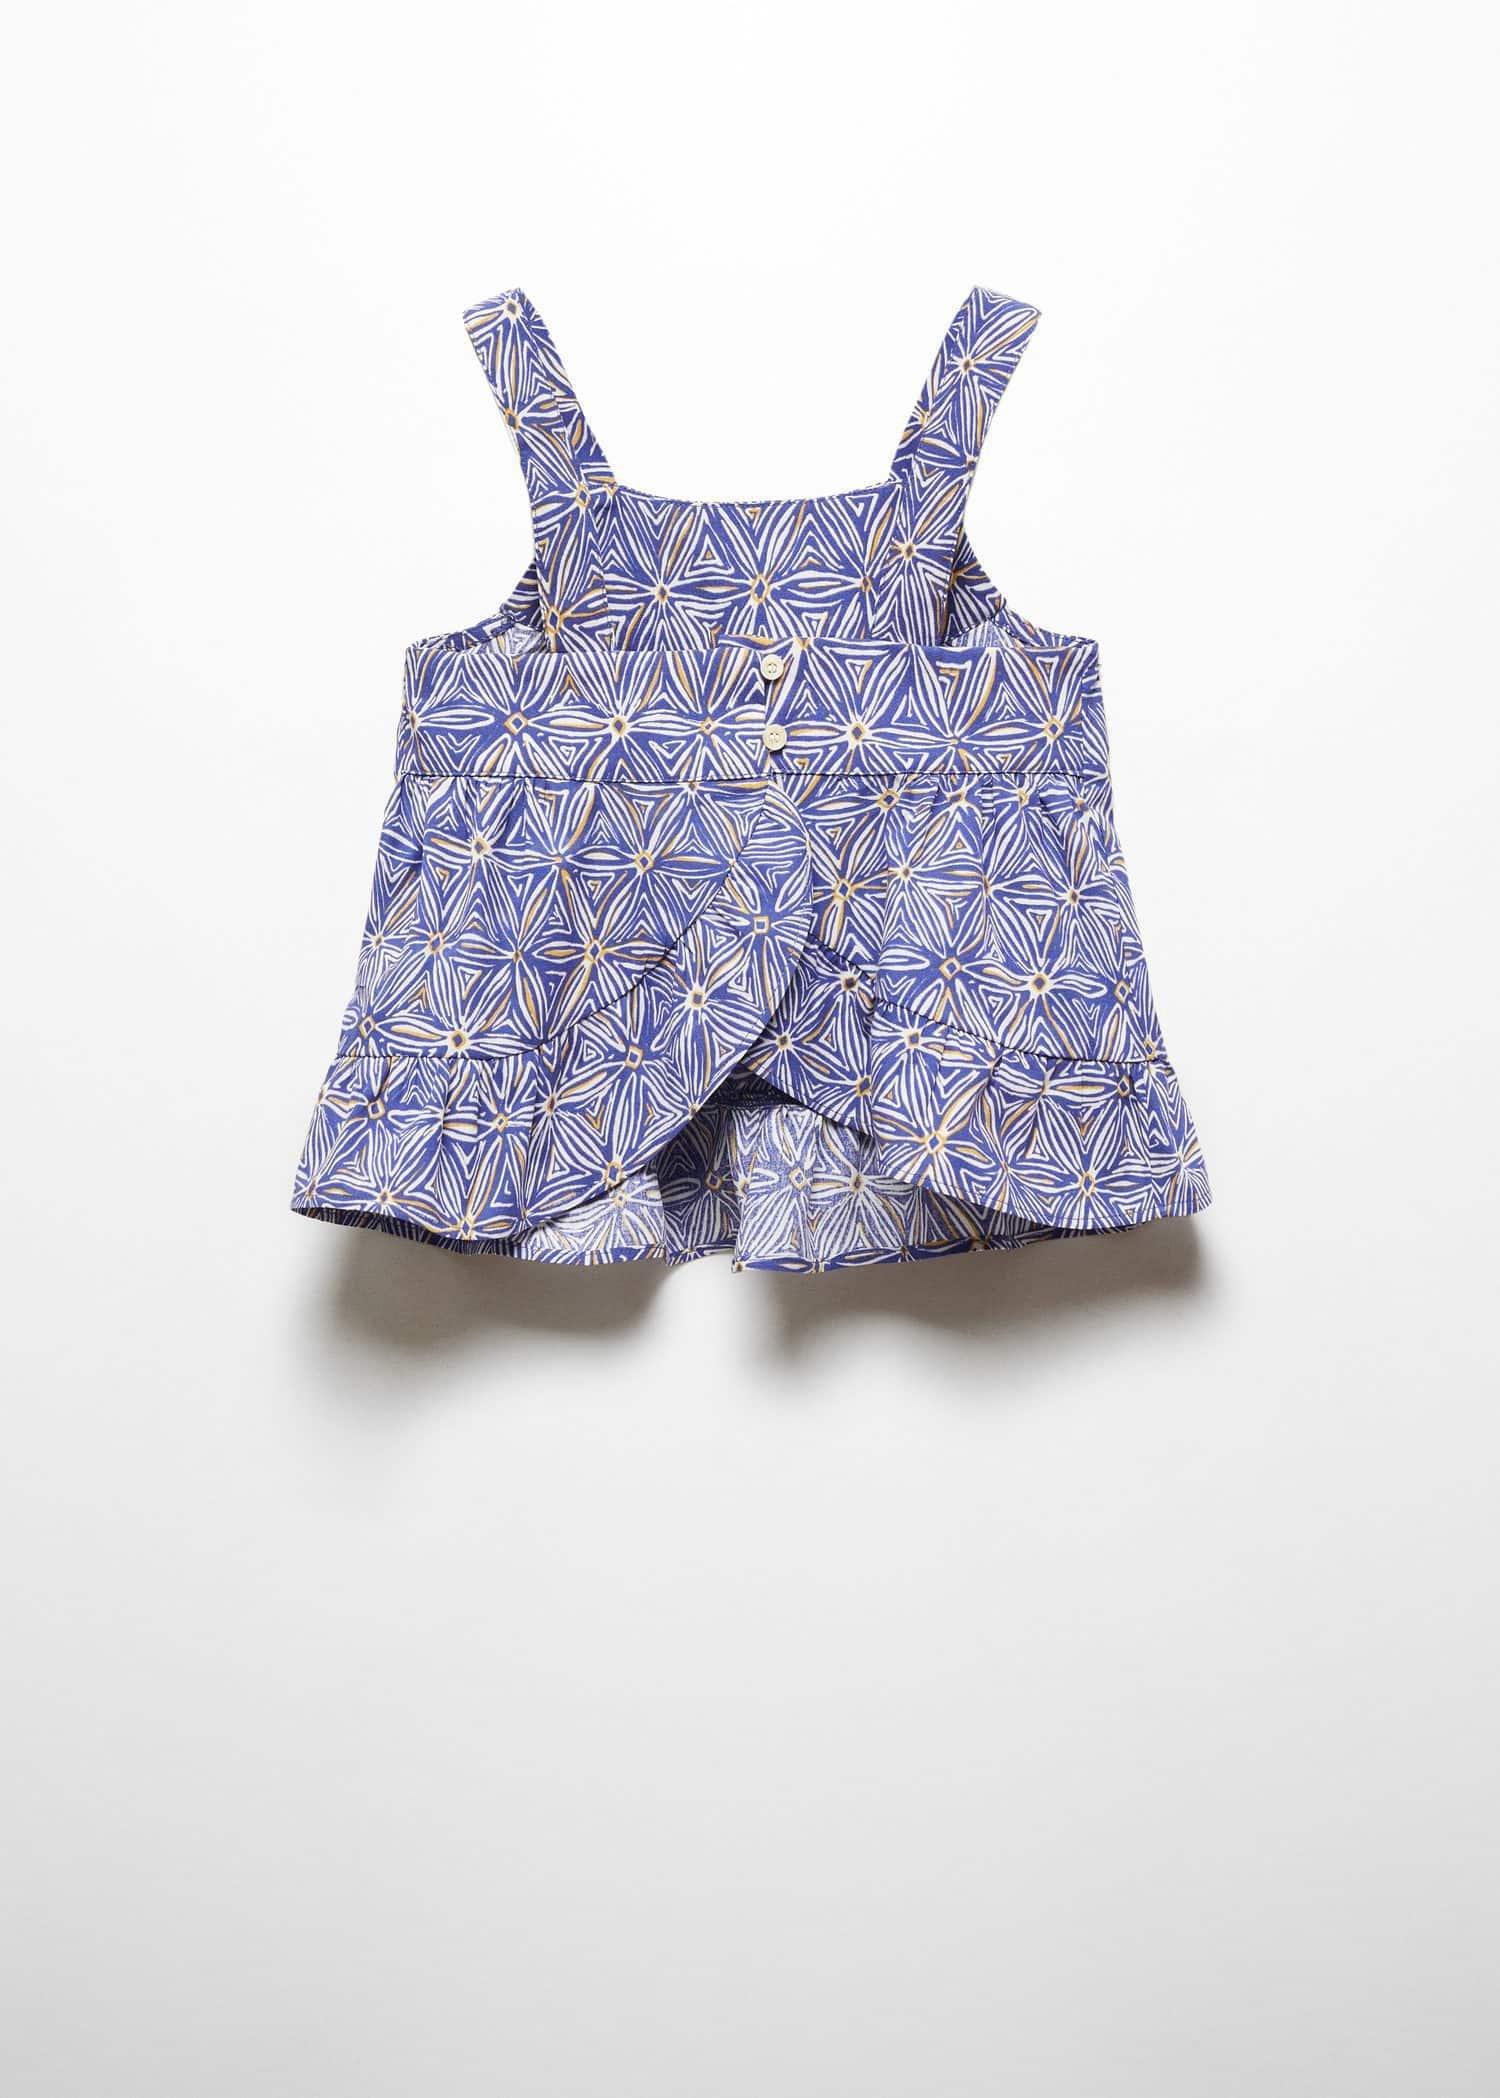 Mango - Blue Printed Blouse With Opening Detail, Kids Girls